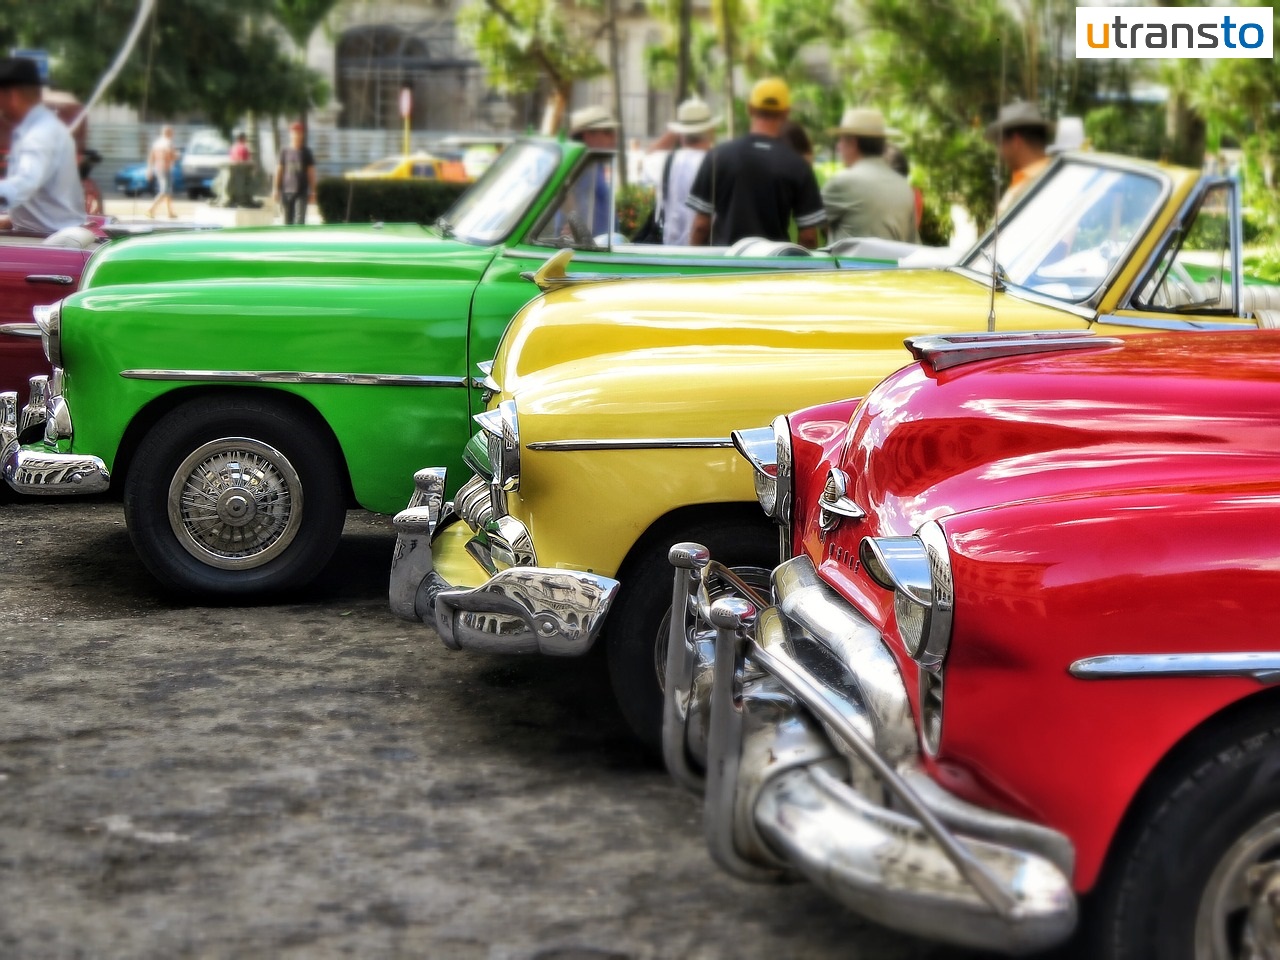 Cuban cars in red yeloow green